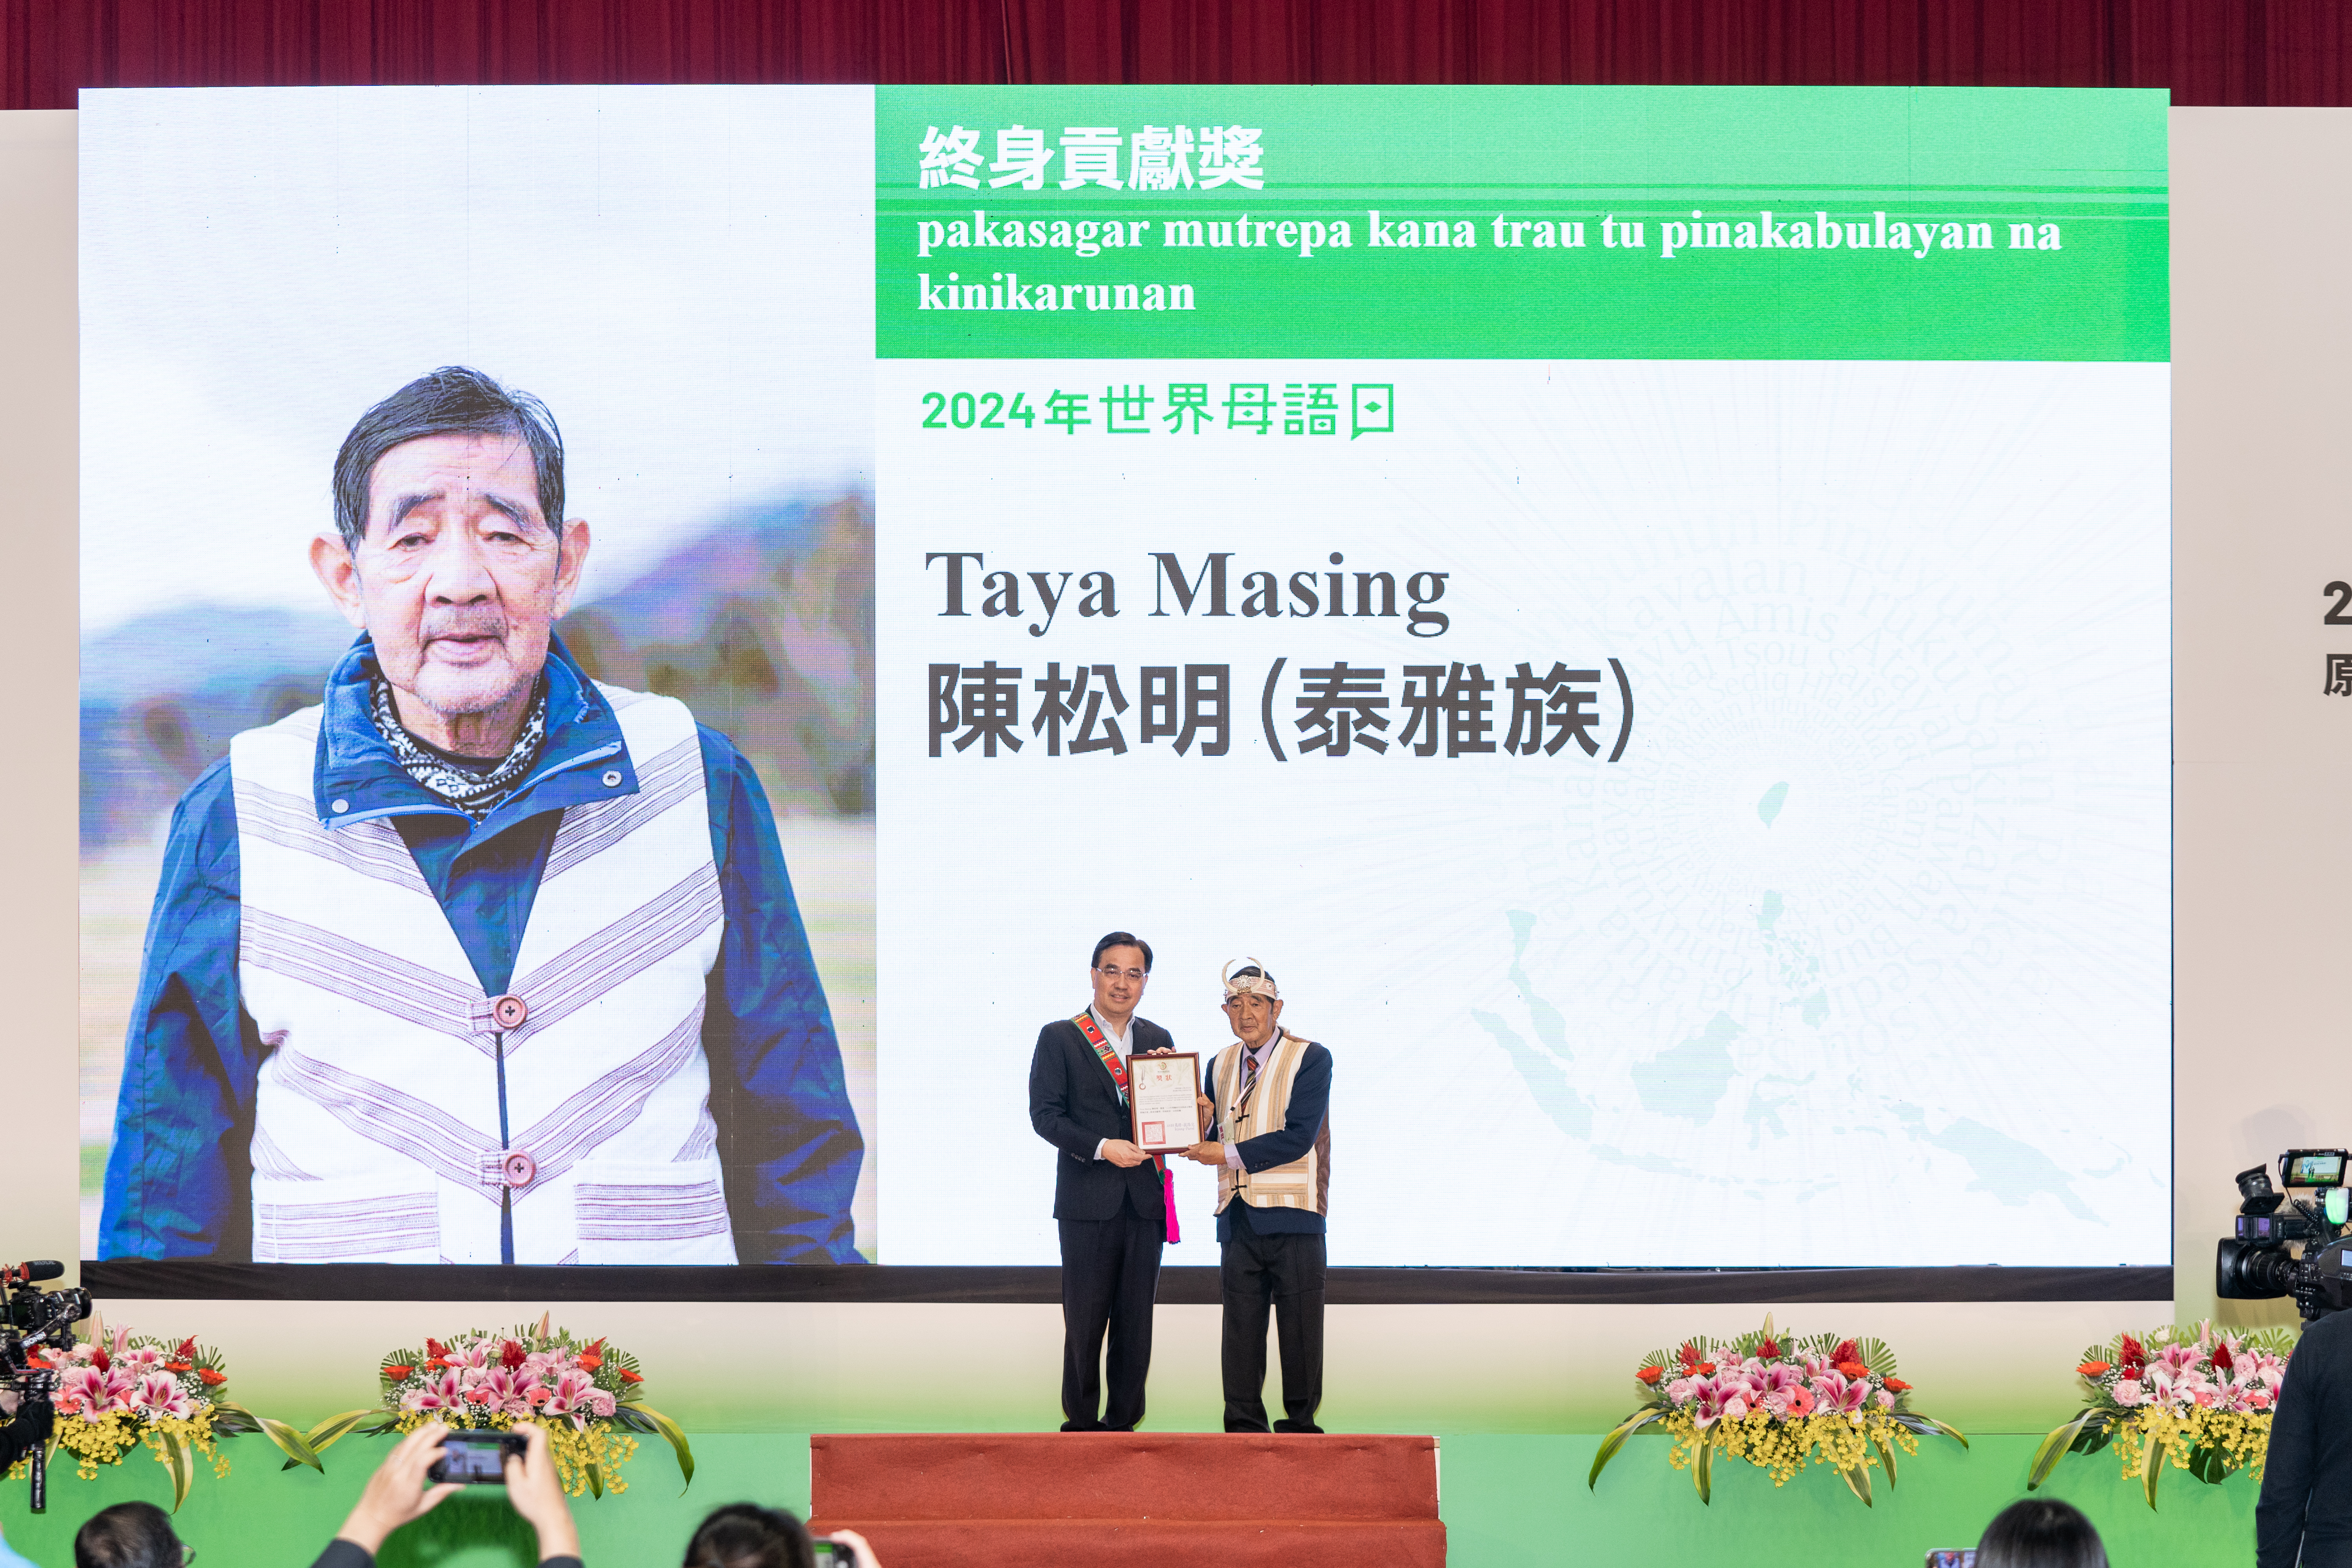 Recipient of the Lifetime Contribution Award  Taya Masing